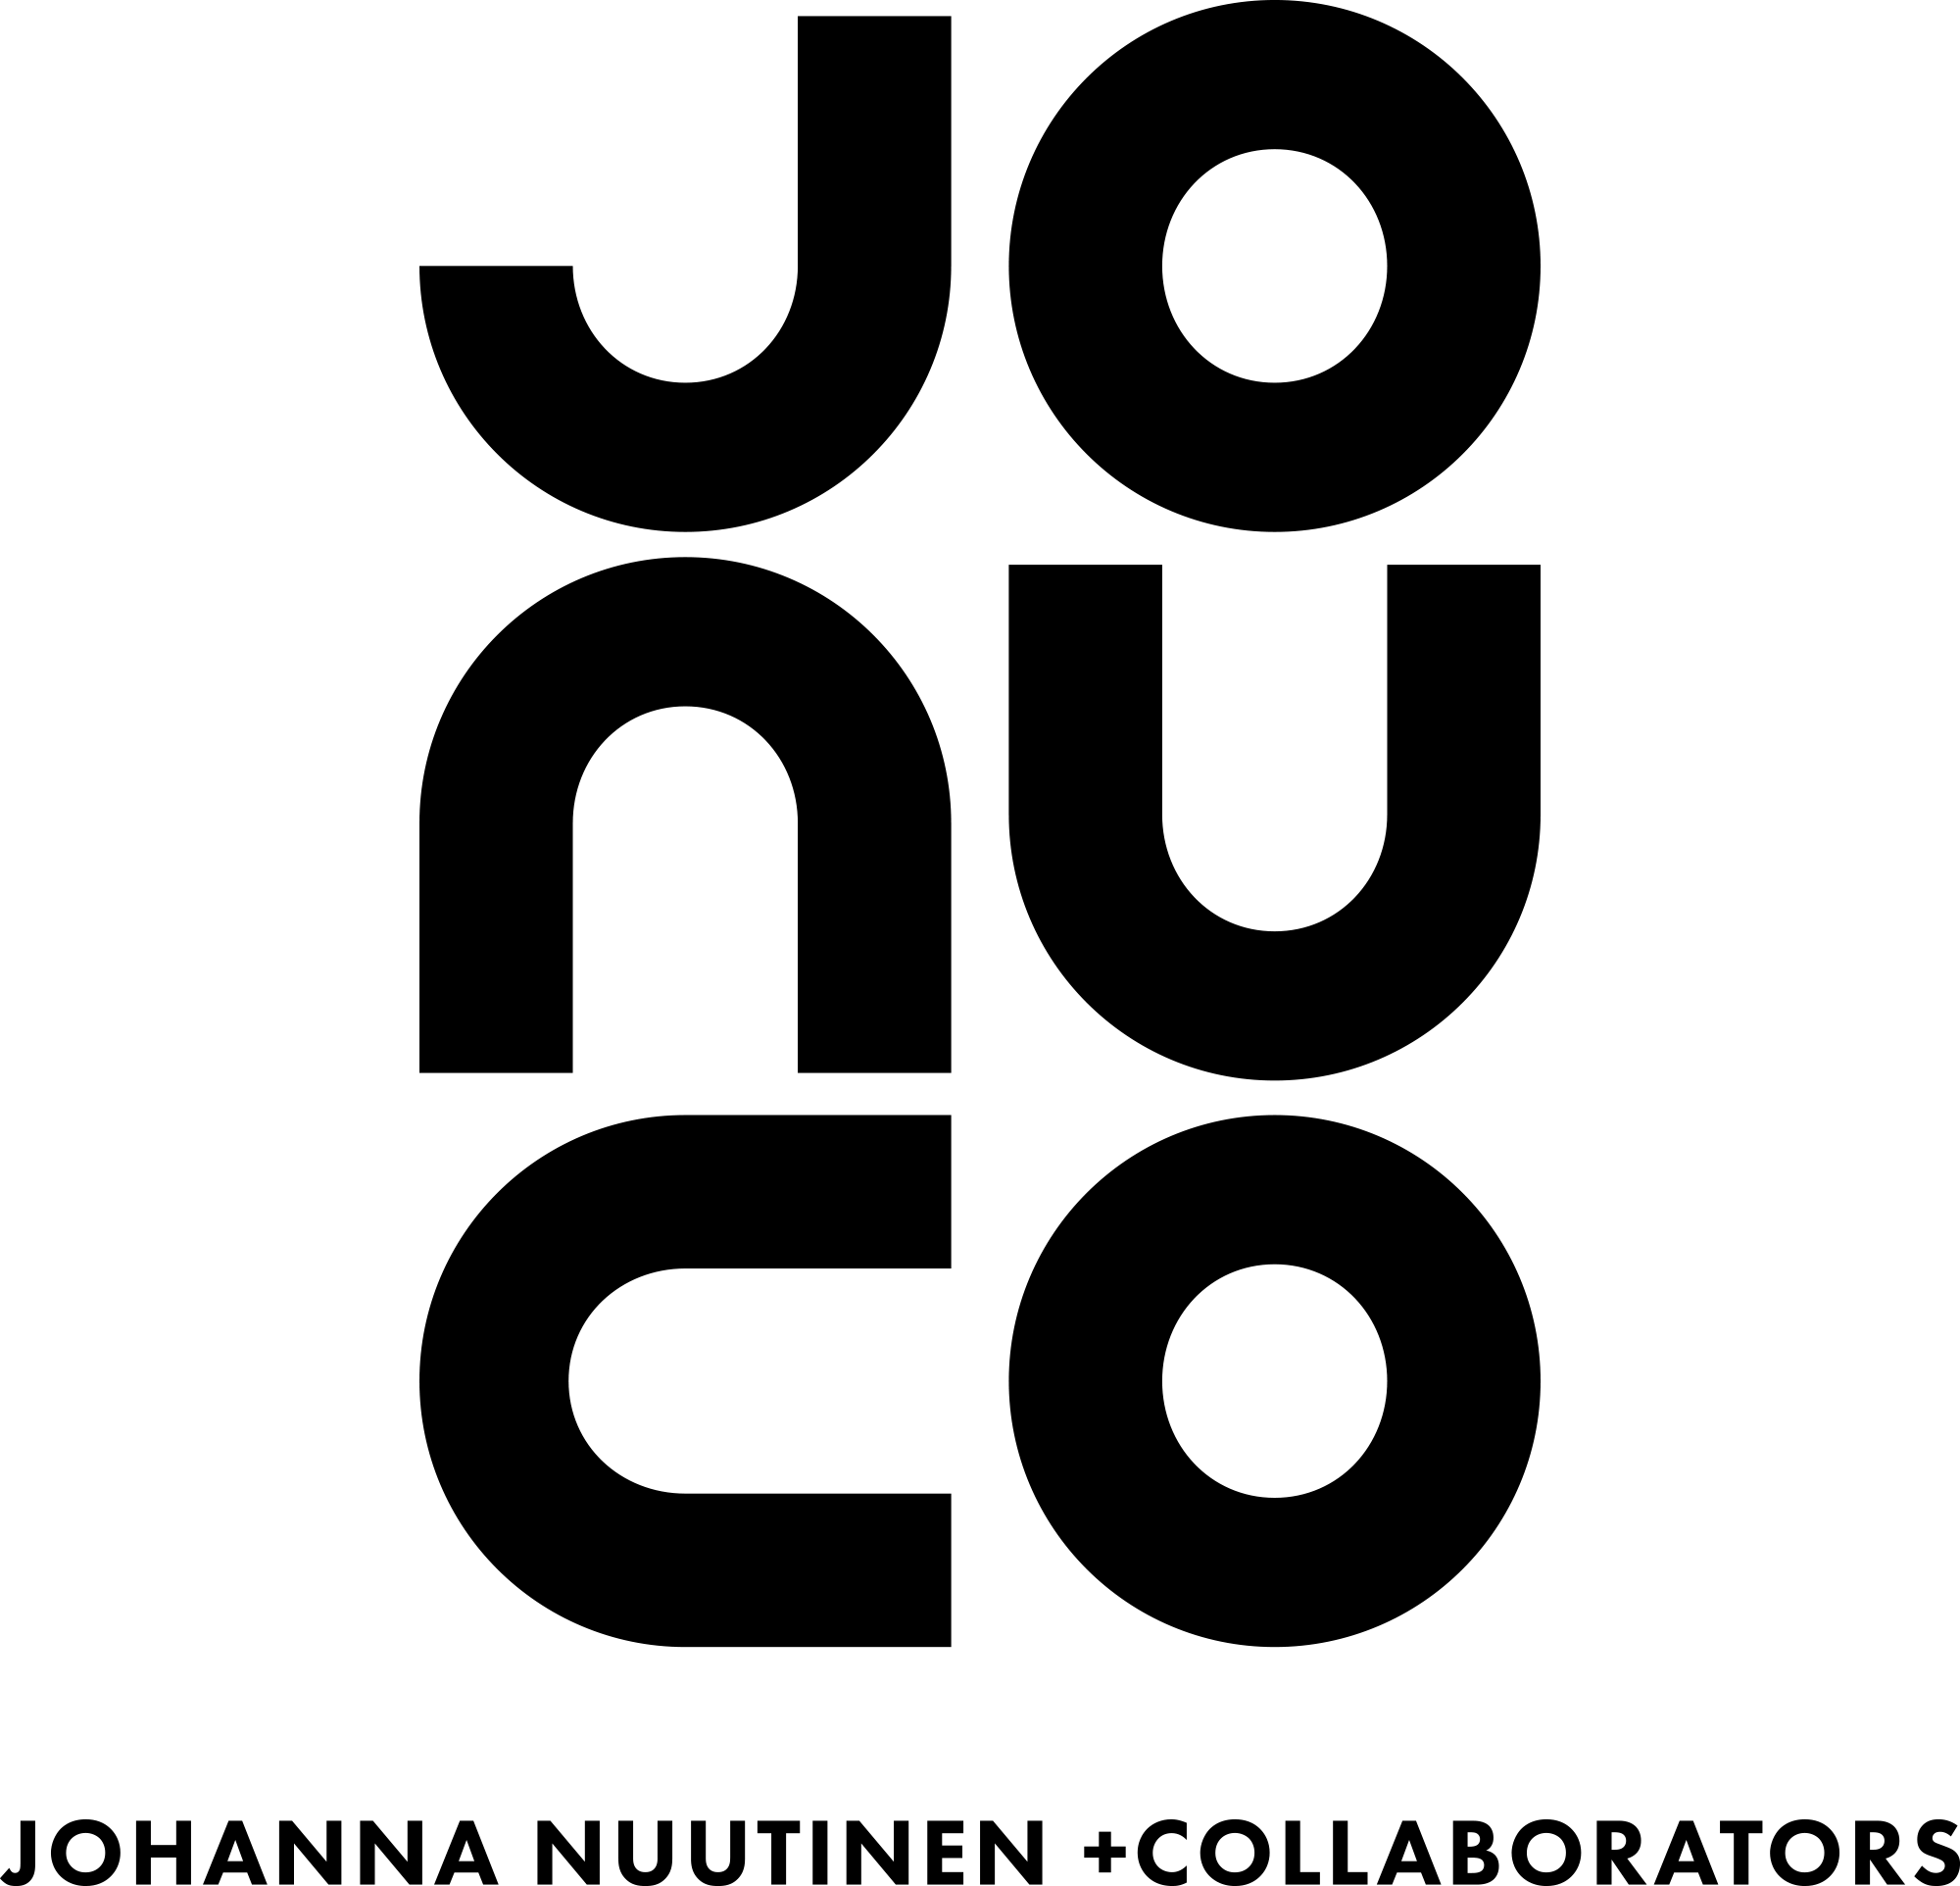 Copy of 4 logo MUSTA jonuco logo 02 musta